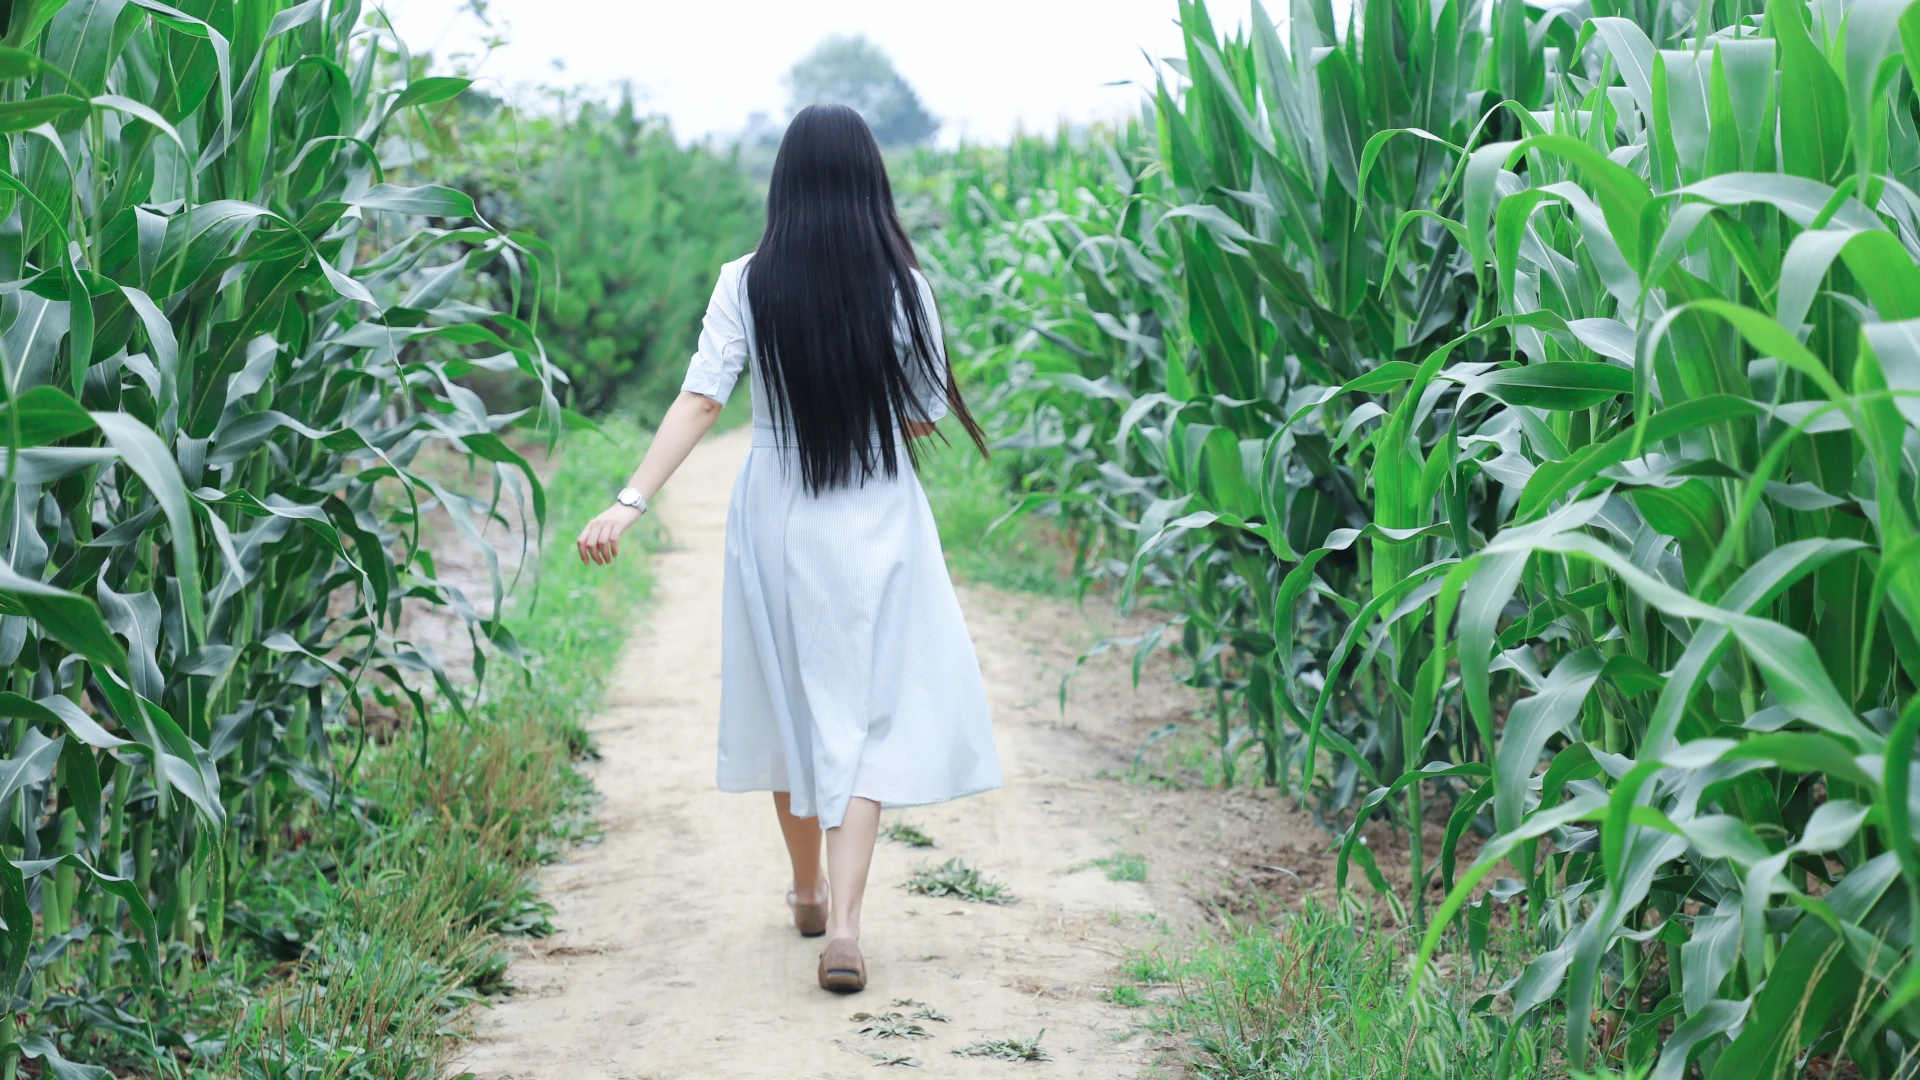 Woman walking through a corn crop field.